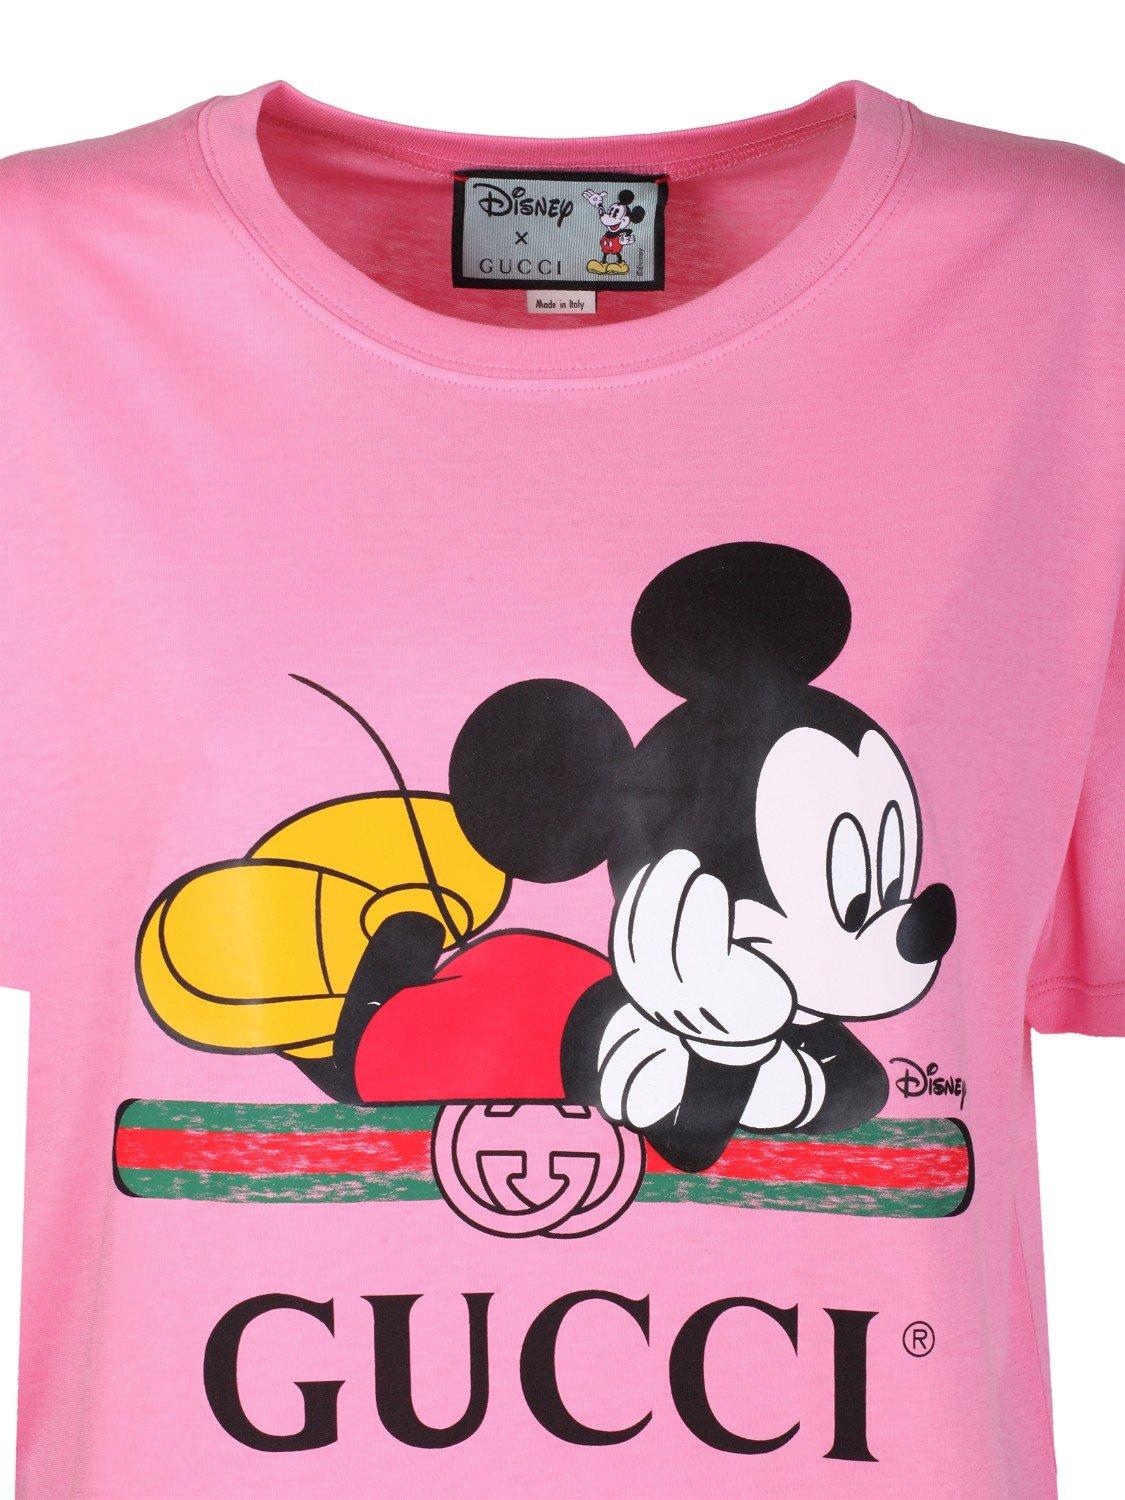 Gucci Cotton Disney X Oversized Tshirt choker in Pink Lyst